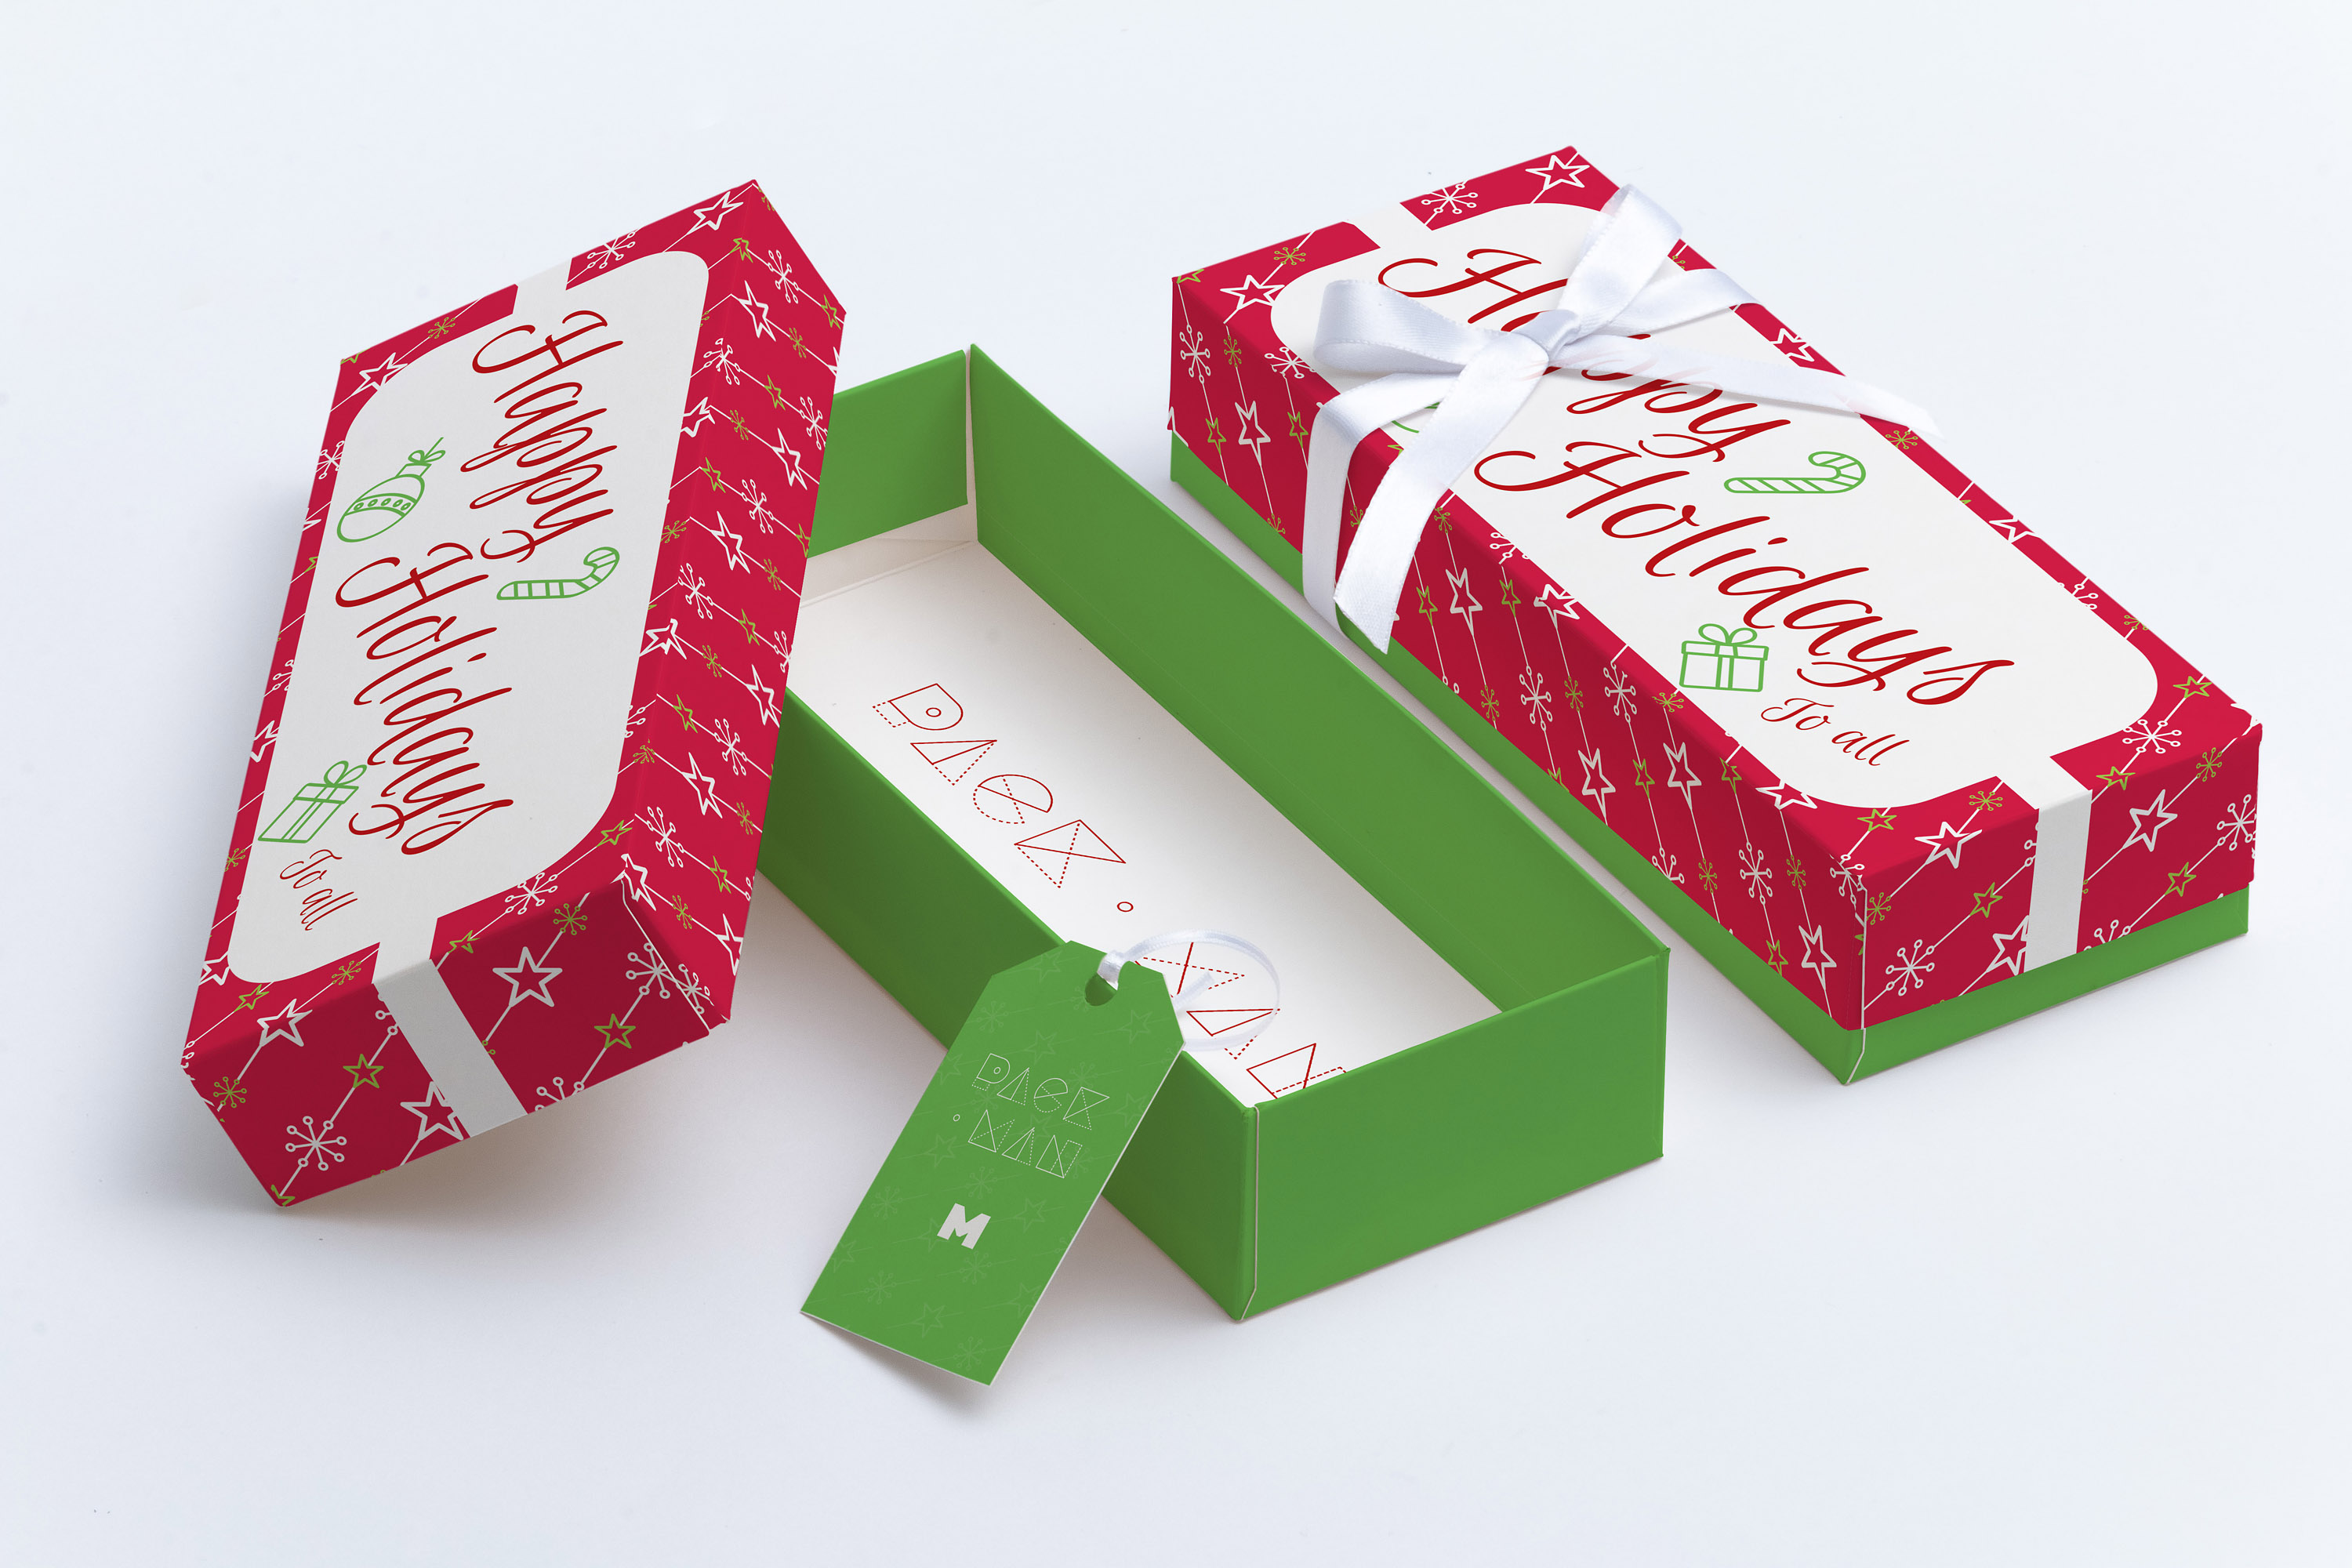 矩形礼品盒包装设计效果图样机03 Rectangular Gift Box Mockup 03插图